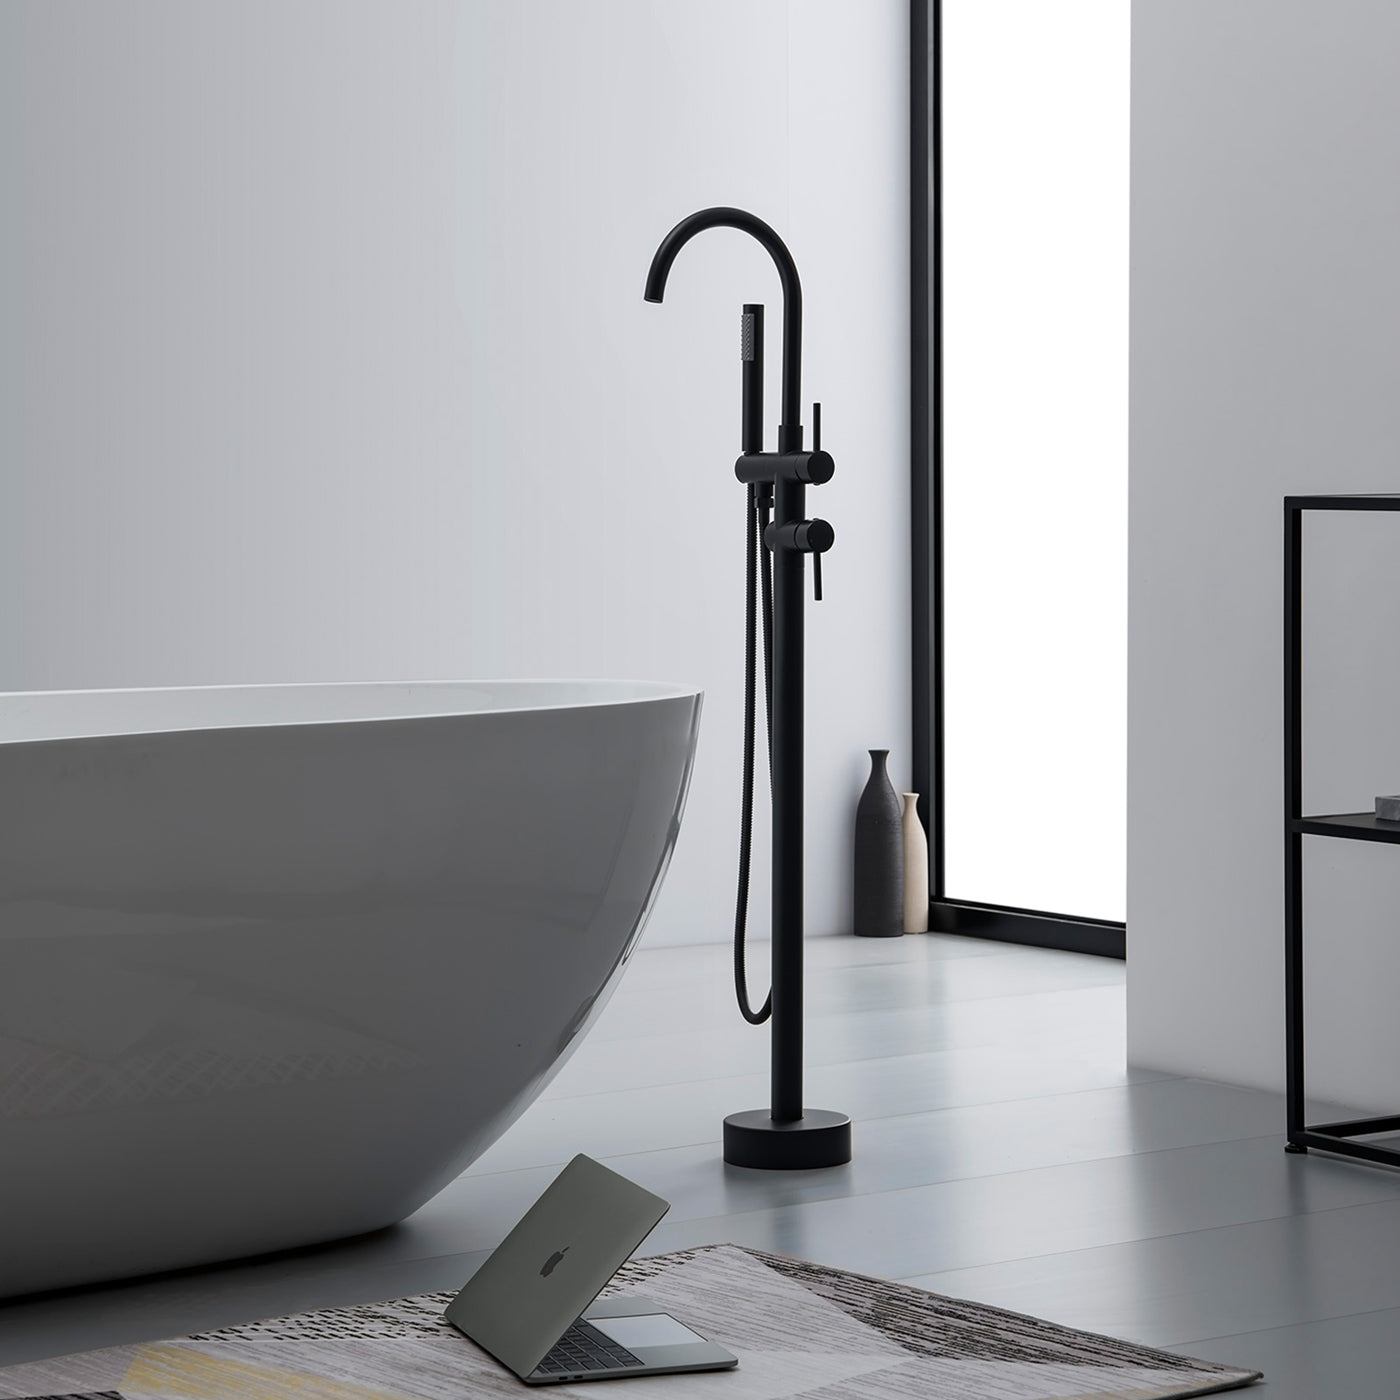 Double-Handle Freestanding Floor Mount Tub Faucet Bathtub Filler with Hand Shower in Matte Black